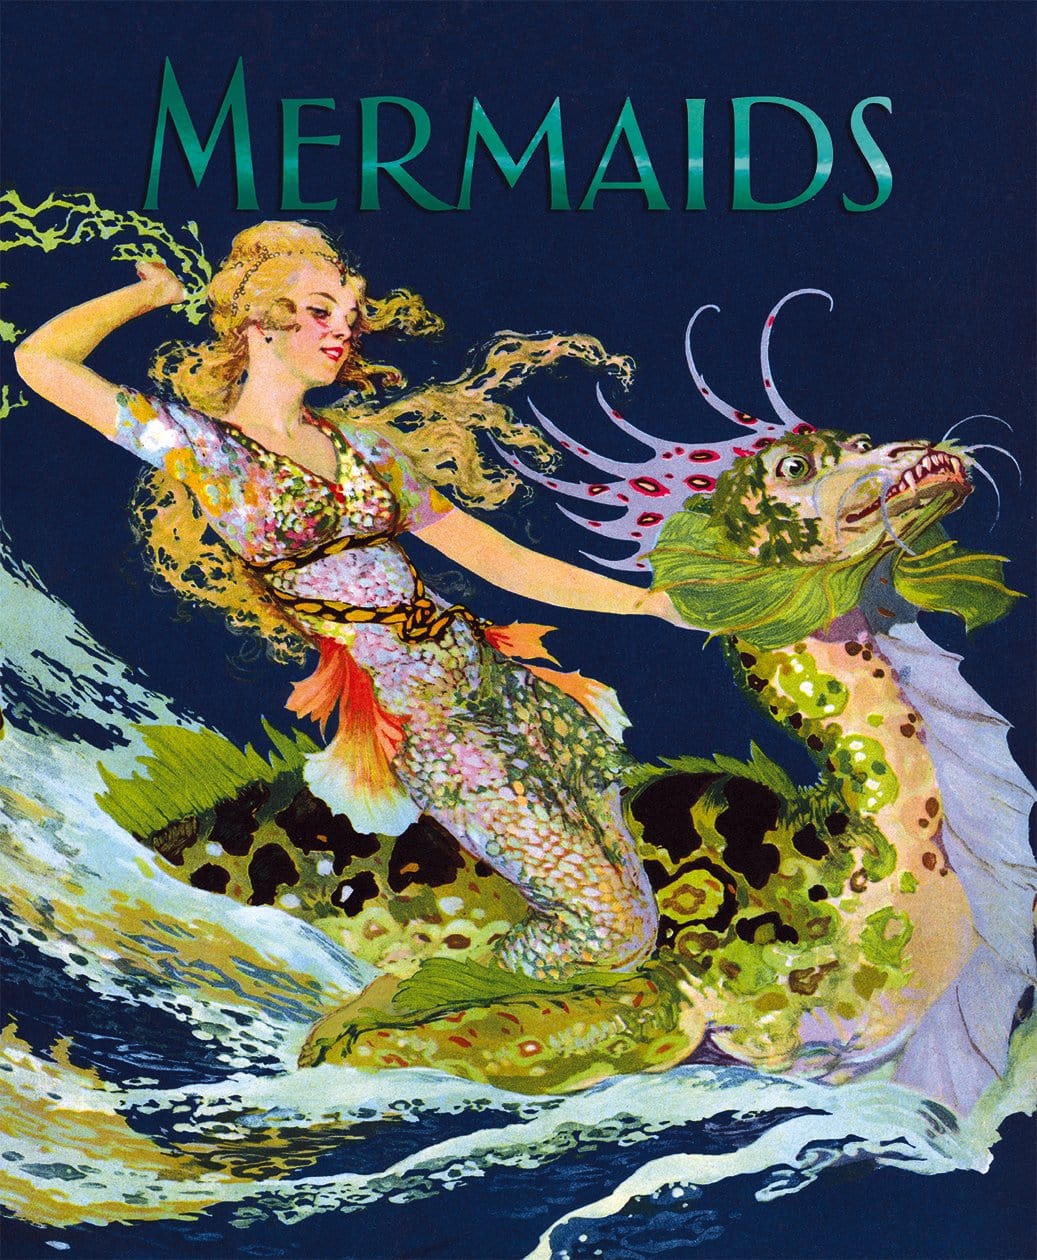 Mermaids (Golden Age of Illustration) - Third Eye